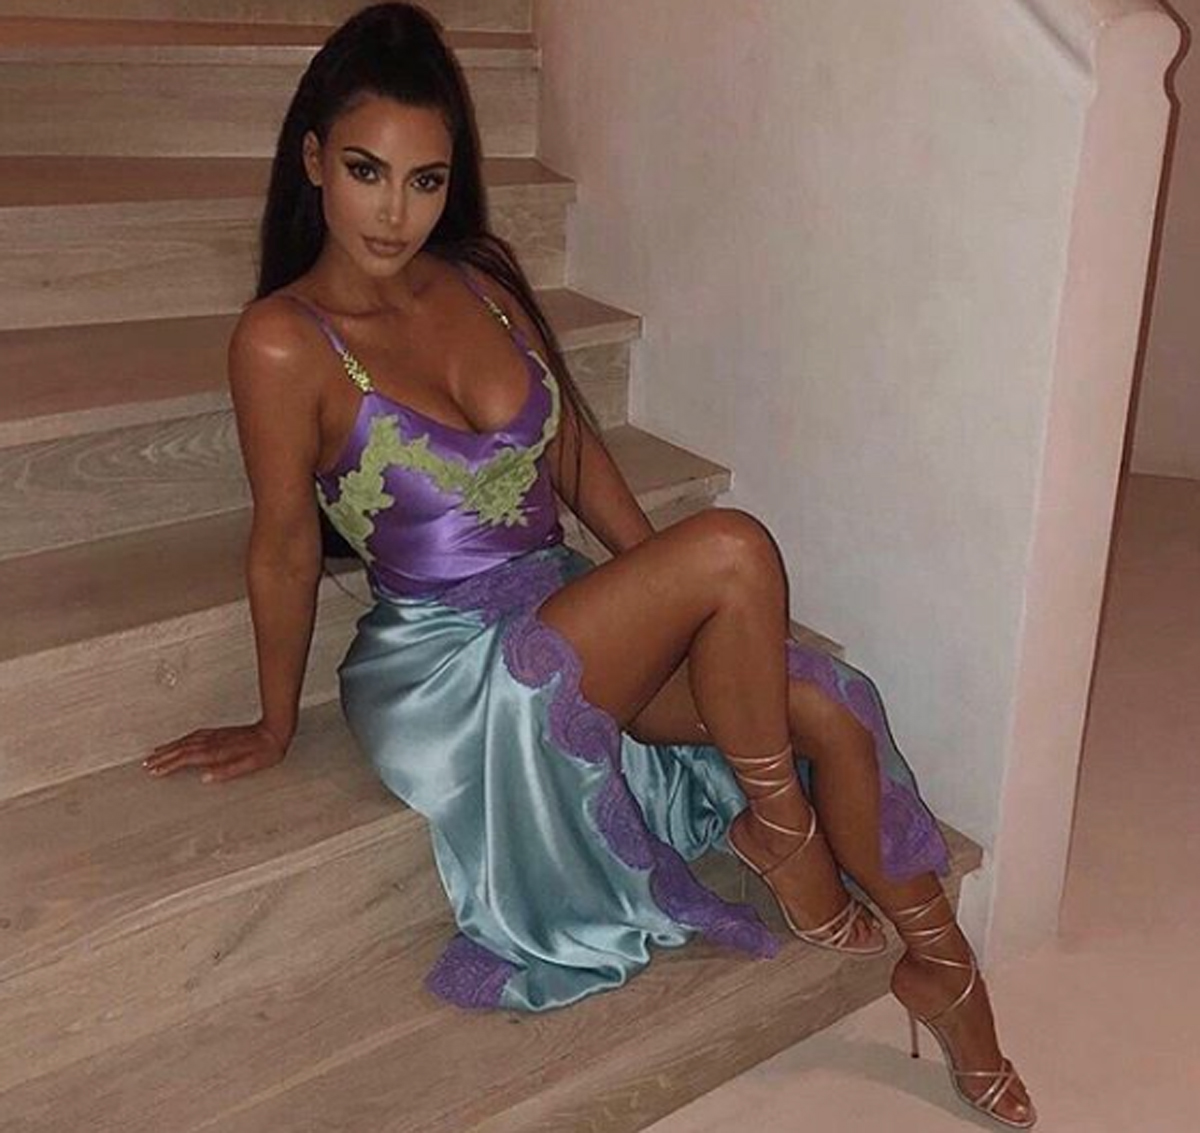 https://perezhilton.com/wp-content/uploads/2019/05/kim-kardashian-instagram-influencer.jpg